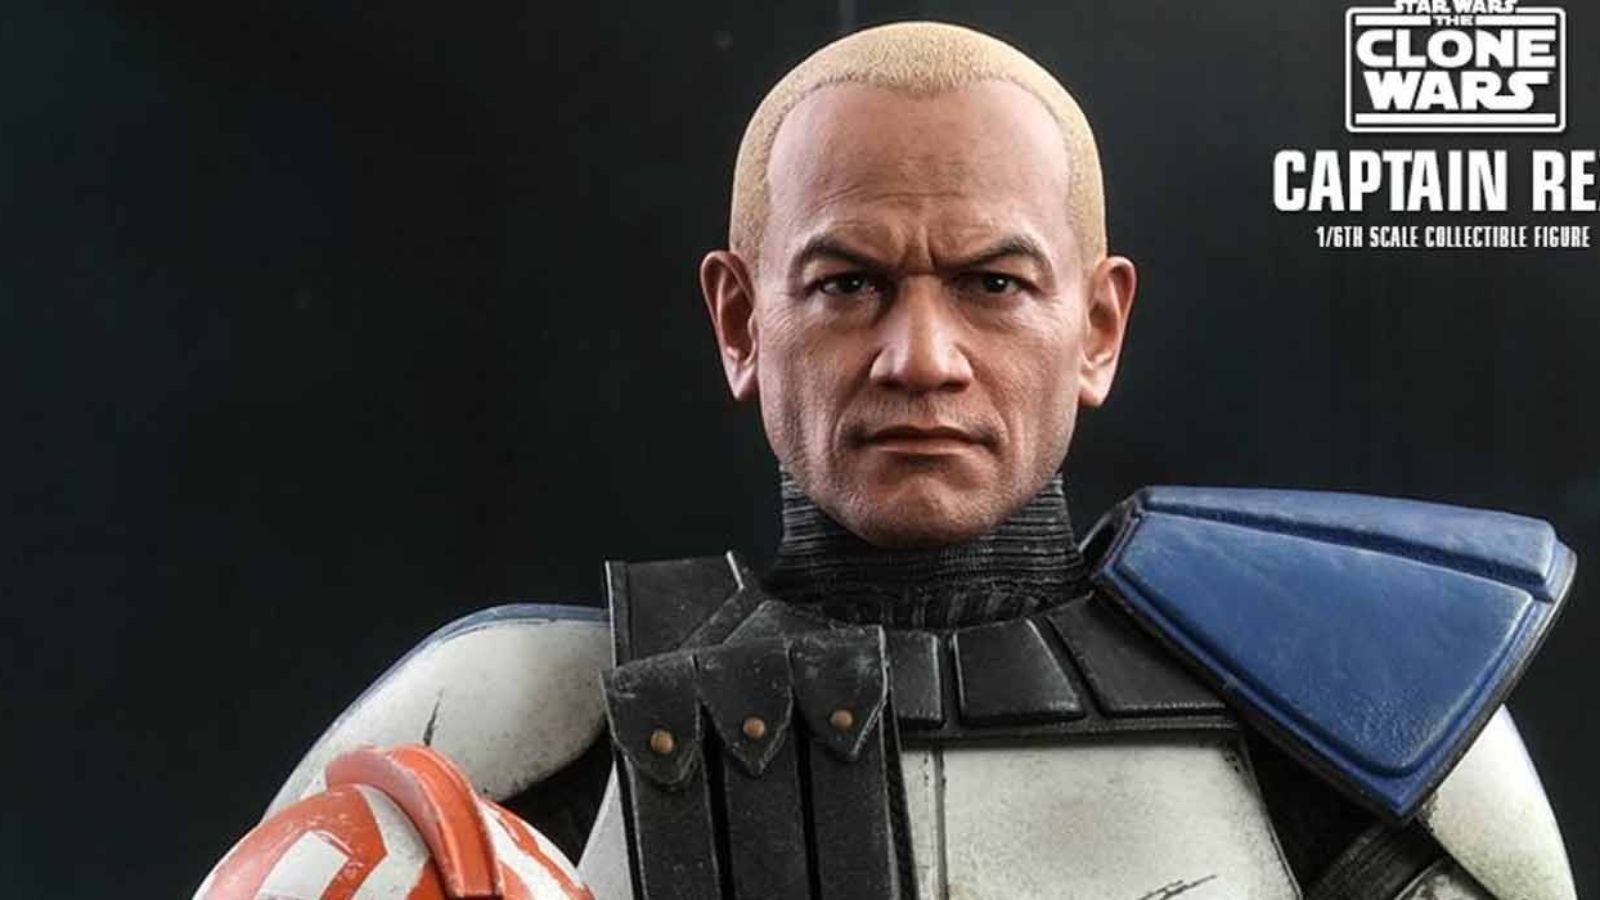 Clone Wars' Captain Rex Gets Season 7 Inspired Hot Toys Figure